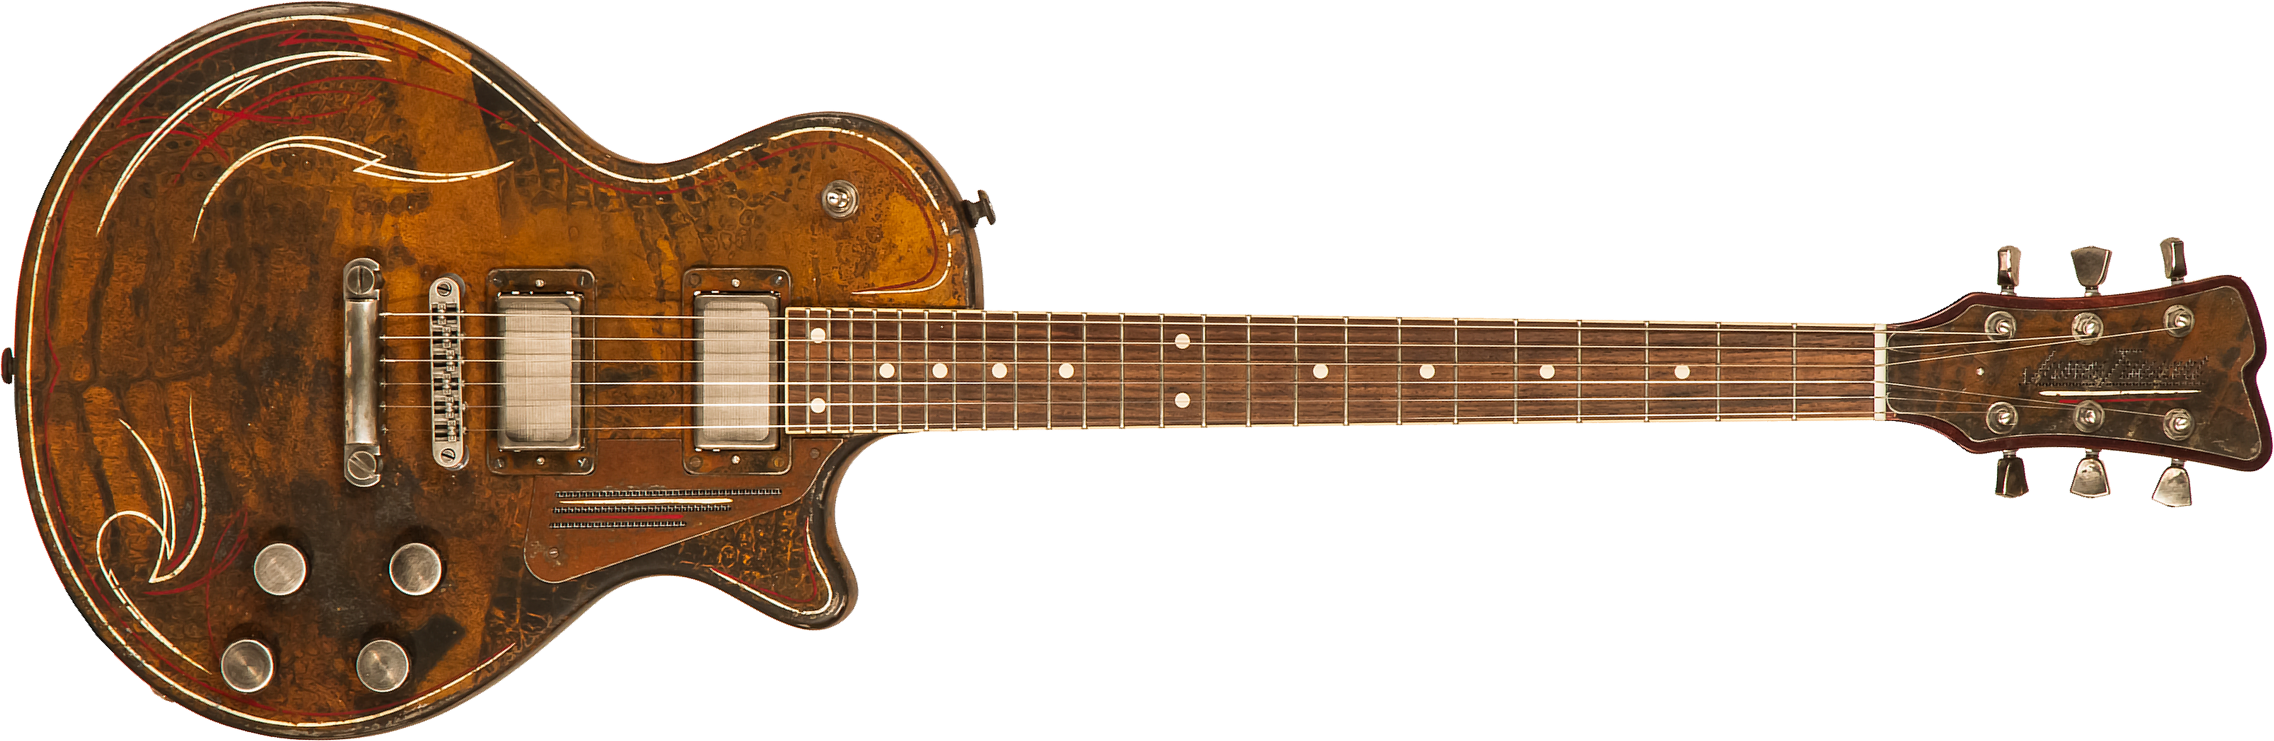 James Trussart Steeldeville Perf.back 2h Ht Rw #21171 - Rust O Matic Pinstriped - Guitare Électrique Single Cut - Main picture